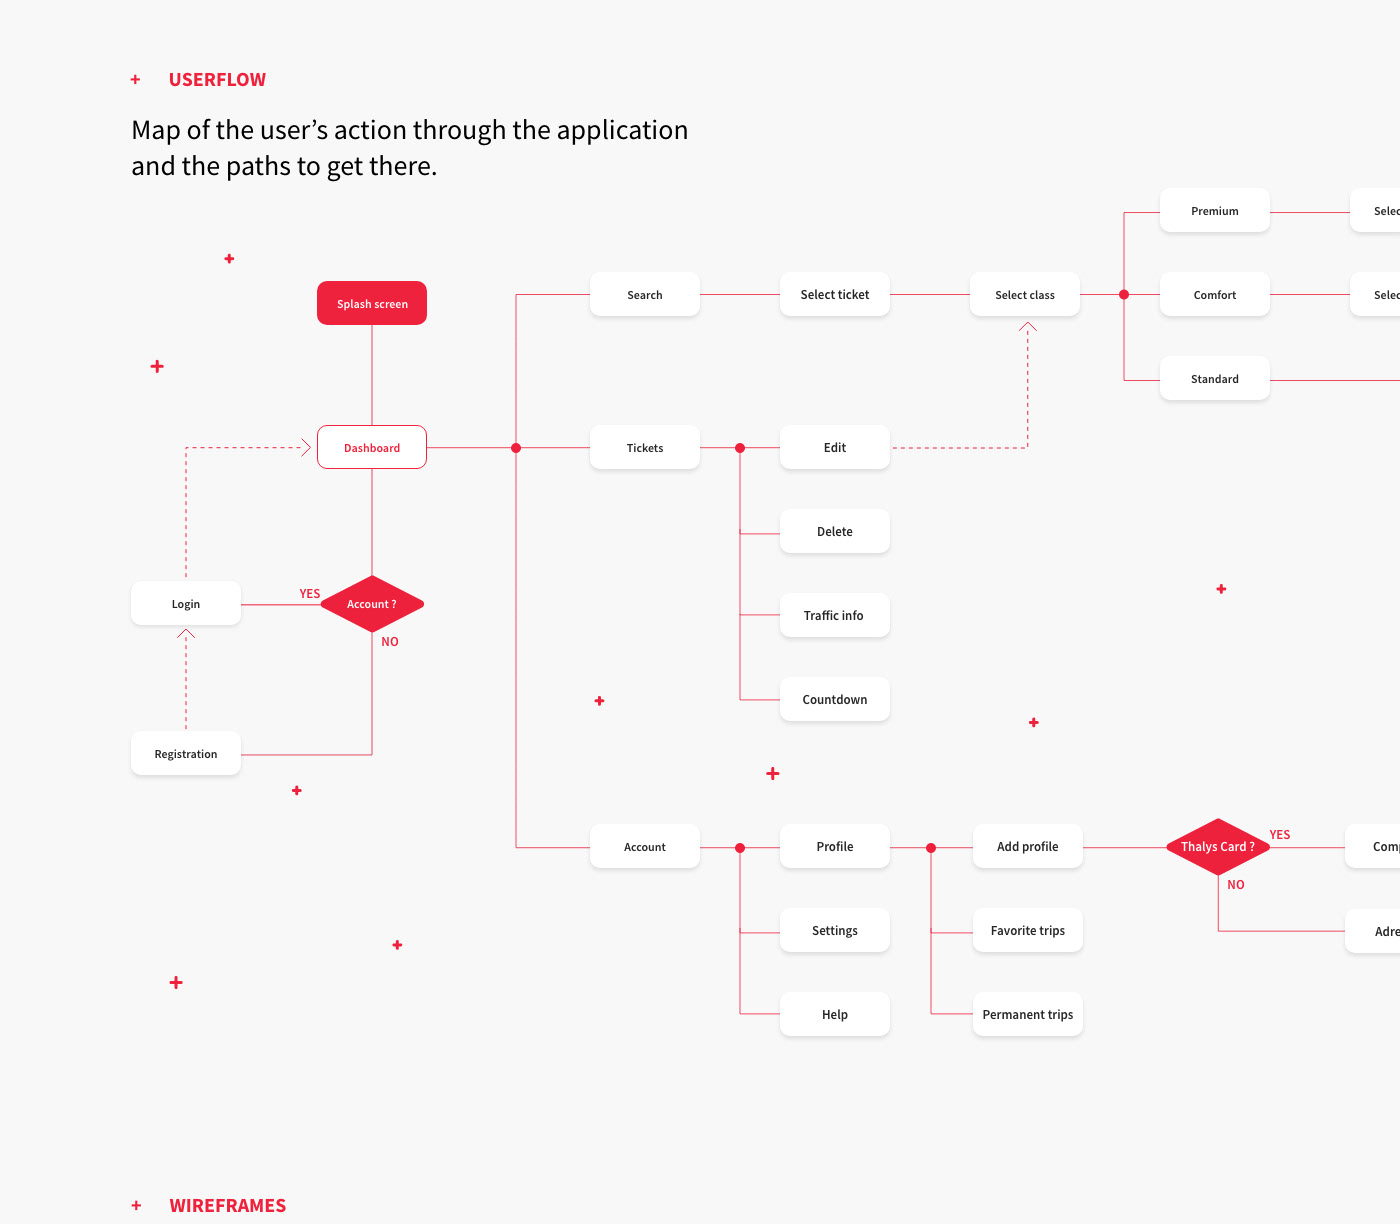 design Webdesign application interaction ui design UX design transport app inspiration Thalys app design app interaction interactive design graphic design  designer